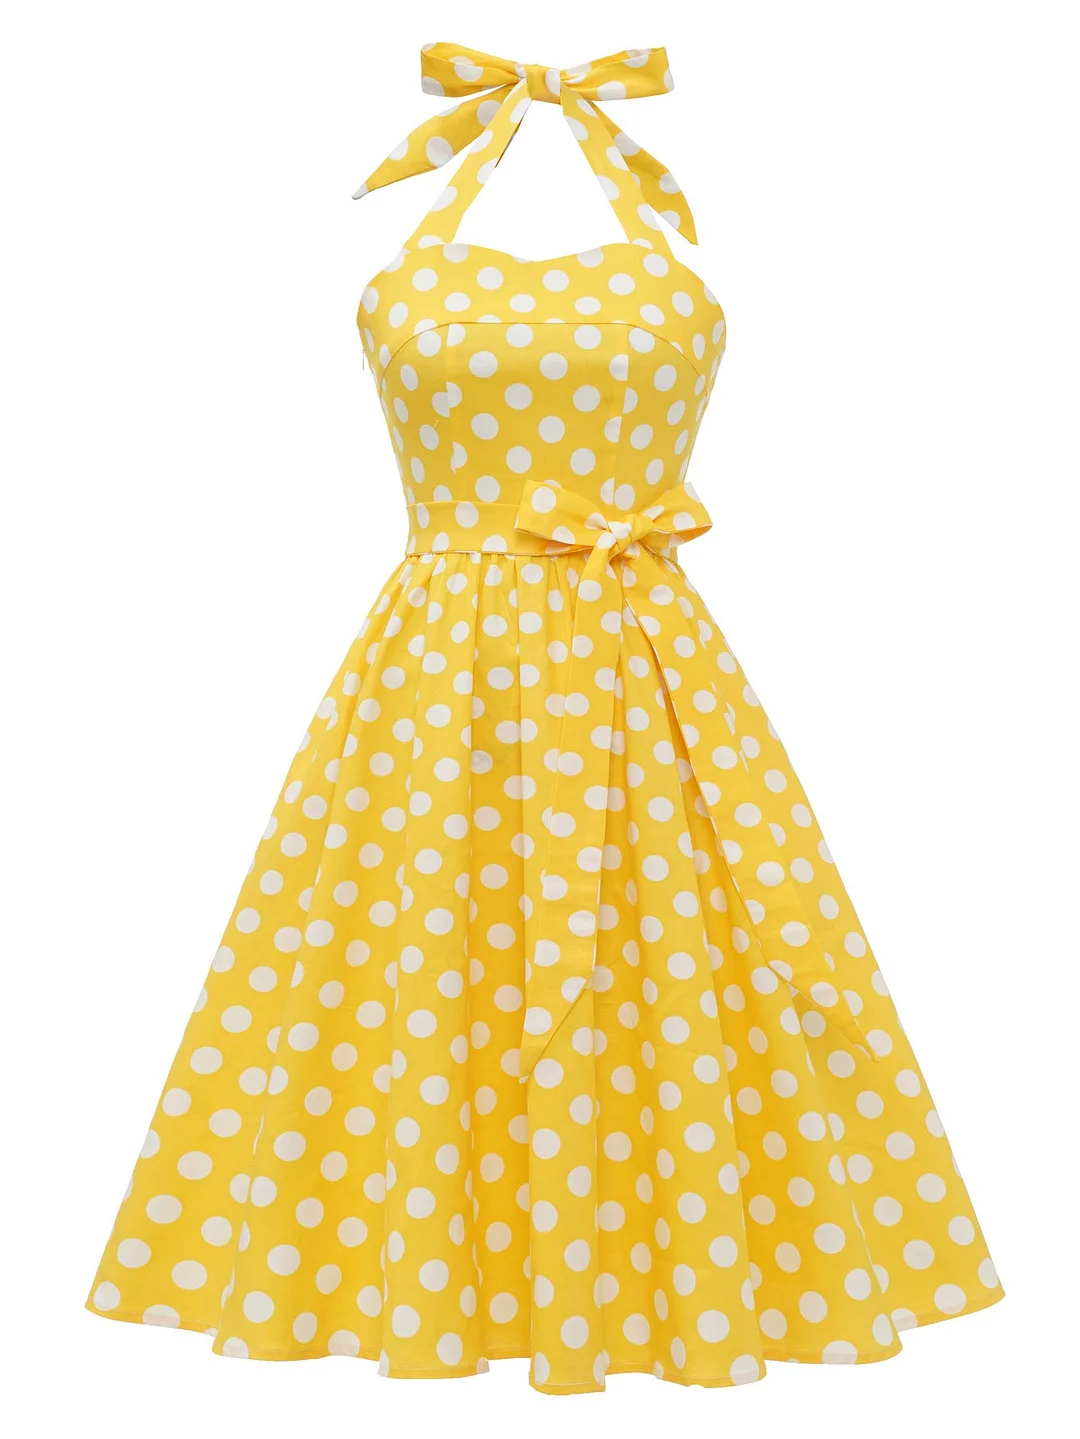 Women's Halter Dress Hepburn Polka Dot Print Bowknot Swing Dress-te